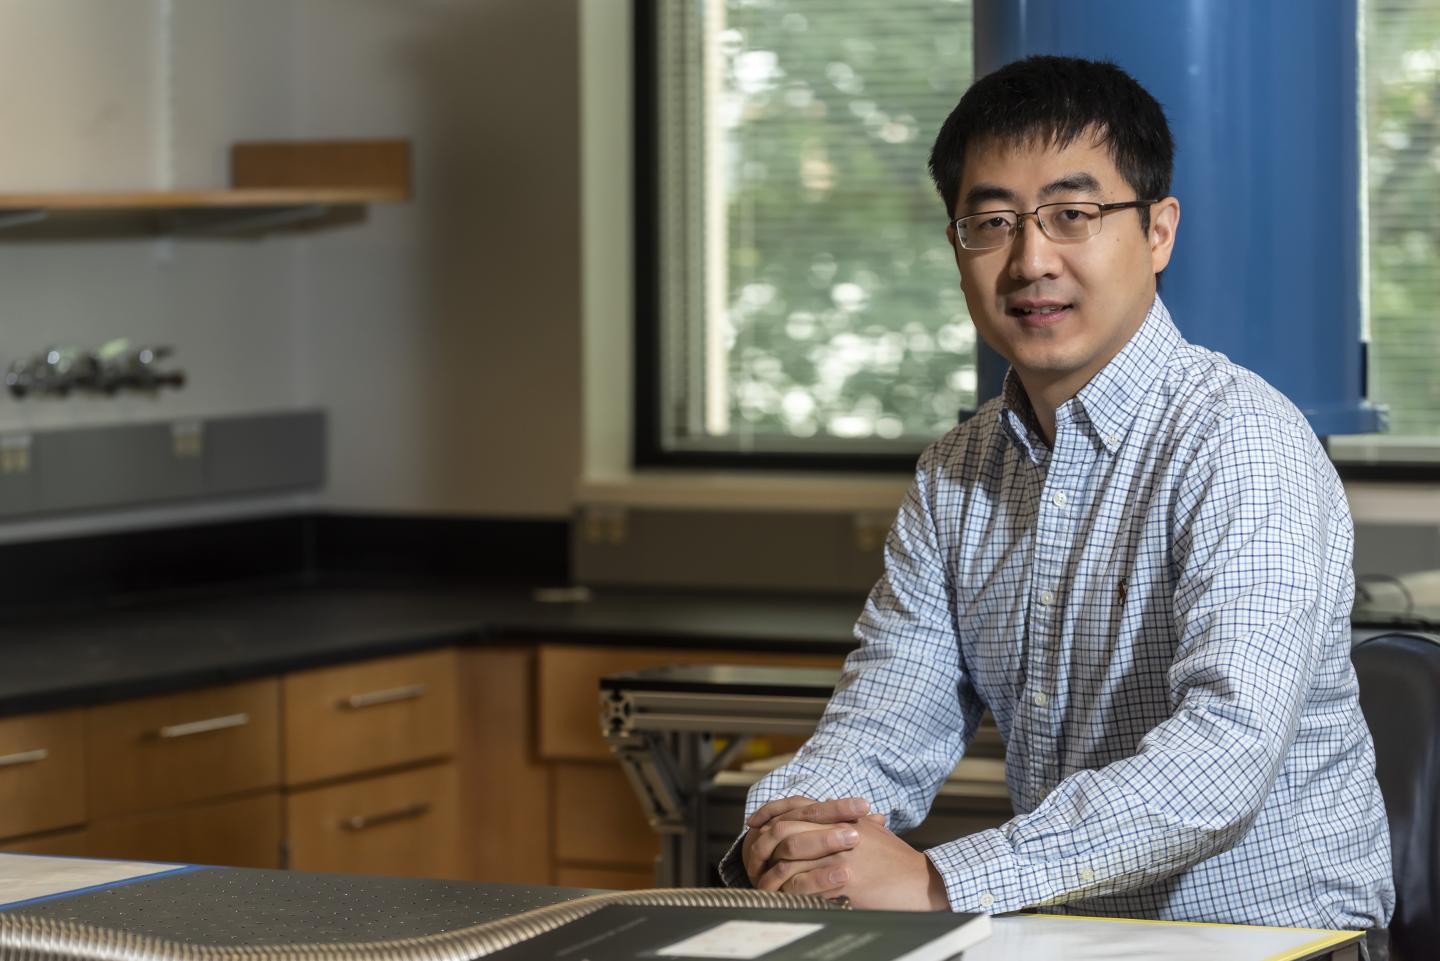 Boston College Assistant Professor of Physics Brian Zhou